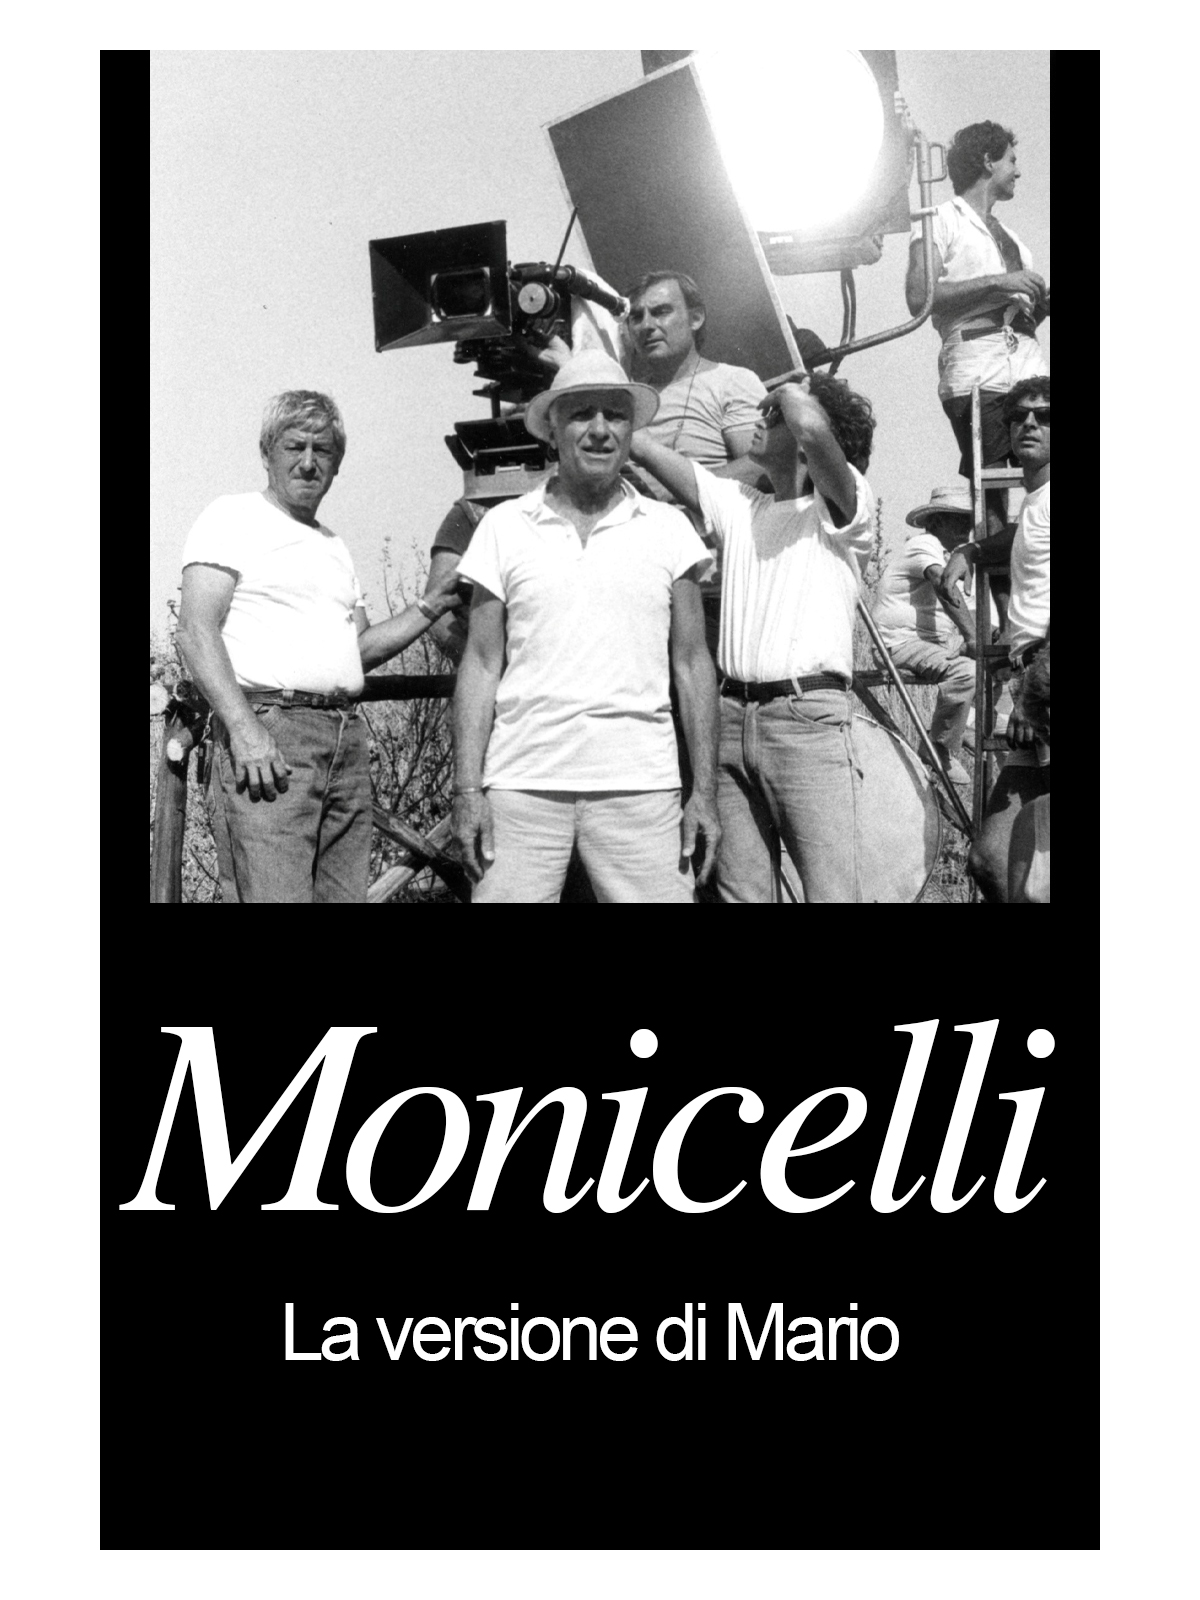 Monicelli: Mario’s Version